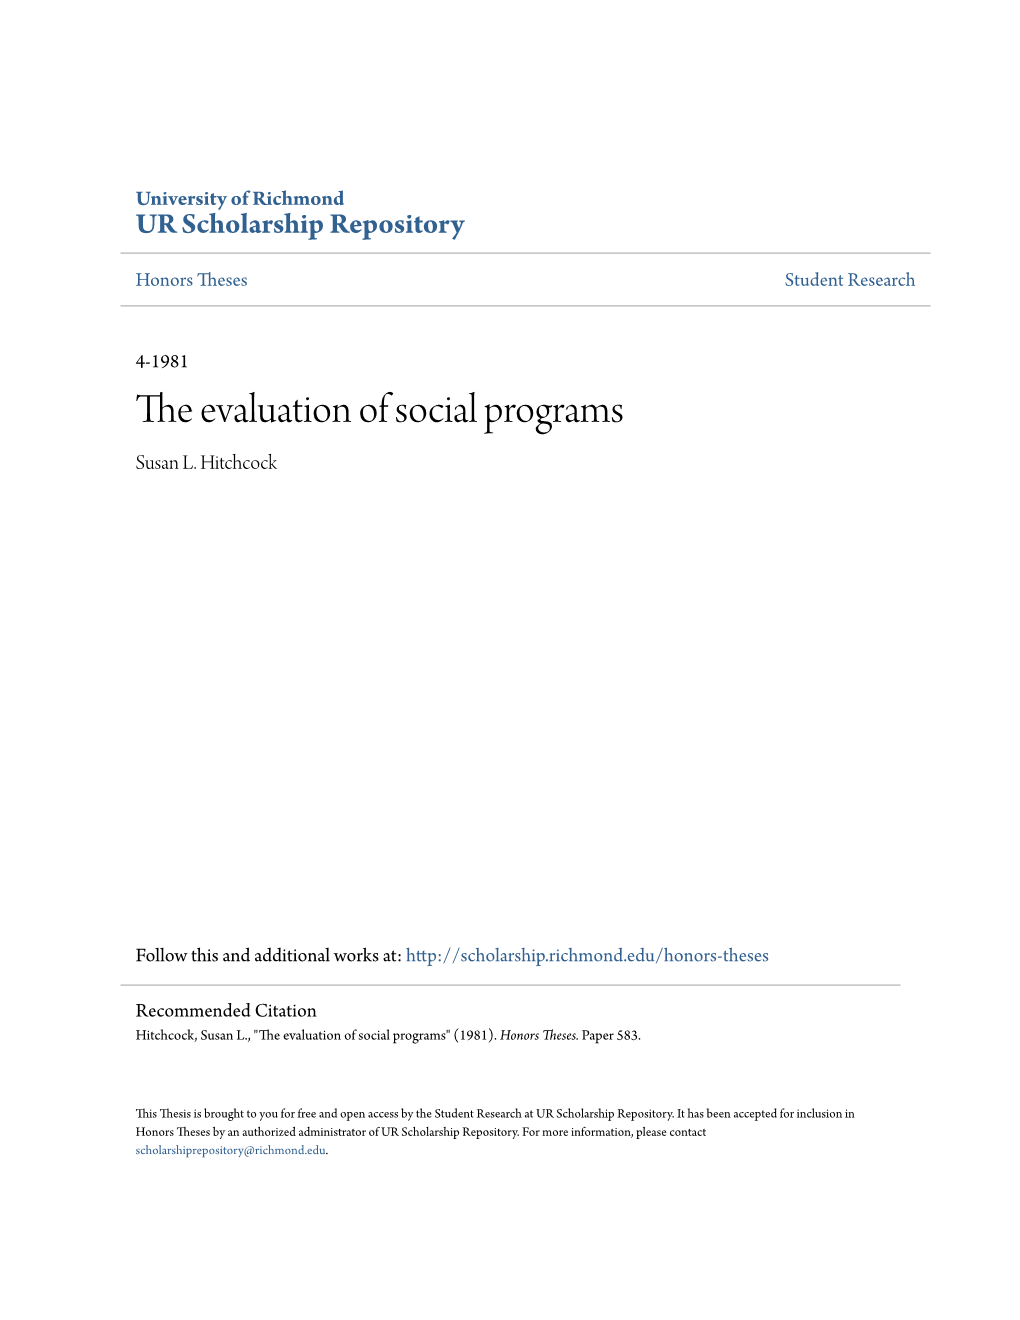 The Evaluation of Social Programs Susan L